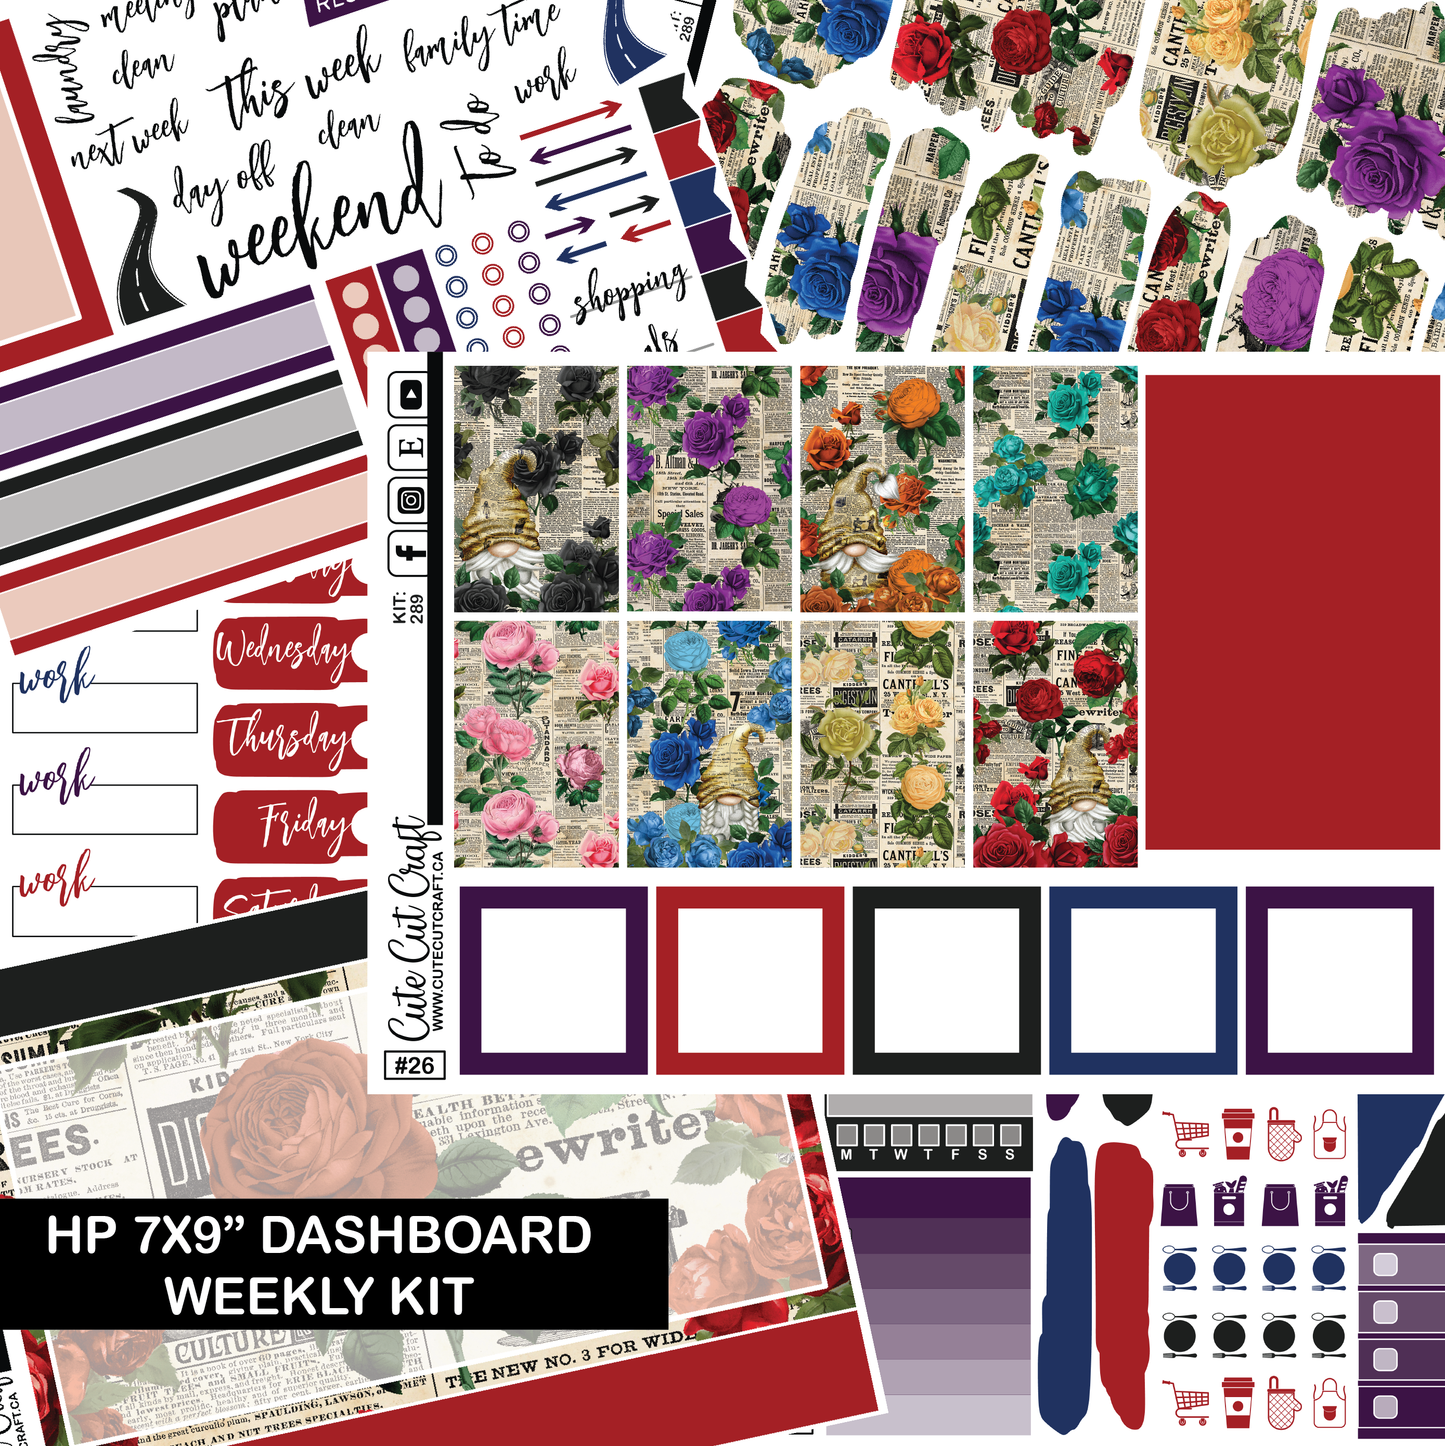 Floral News #289 || HP Dashboard Weekly Kit